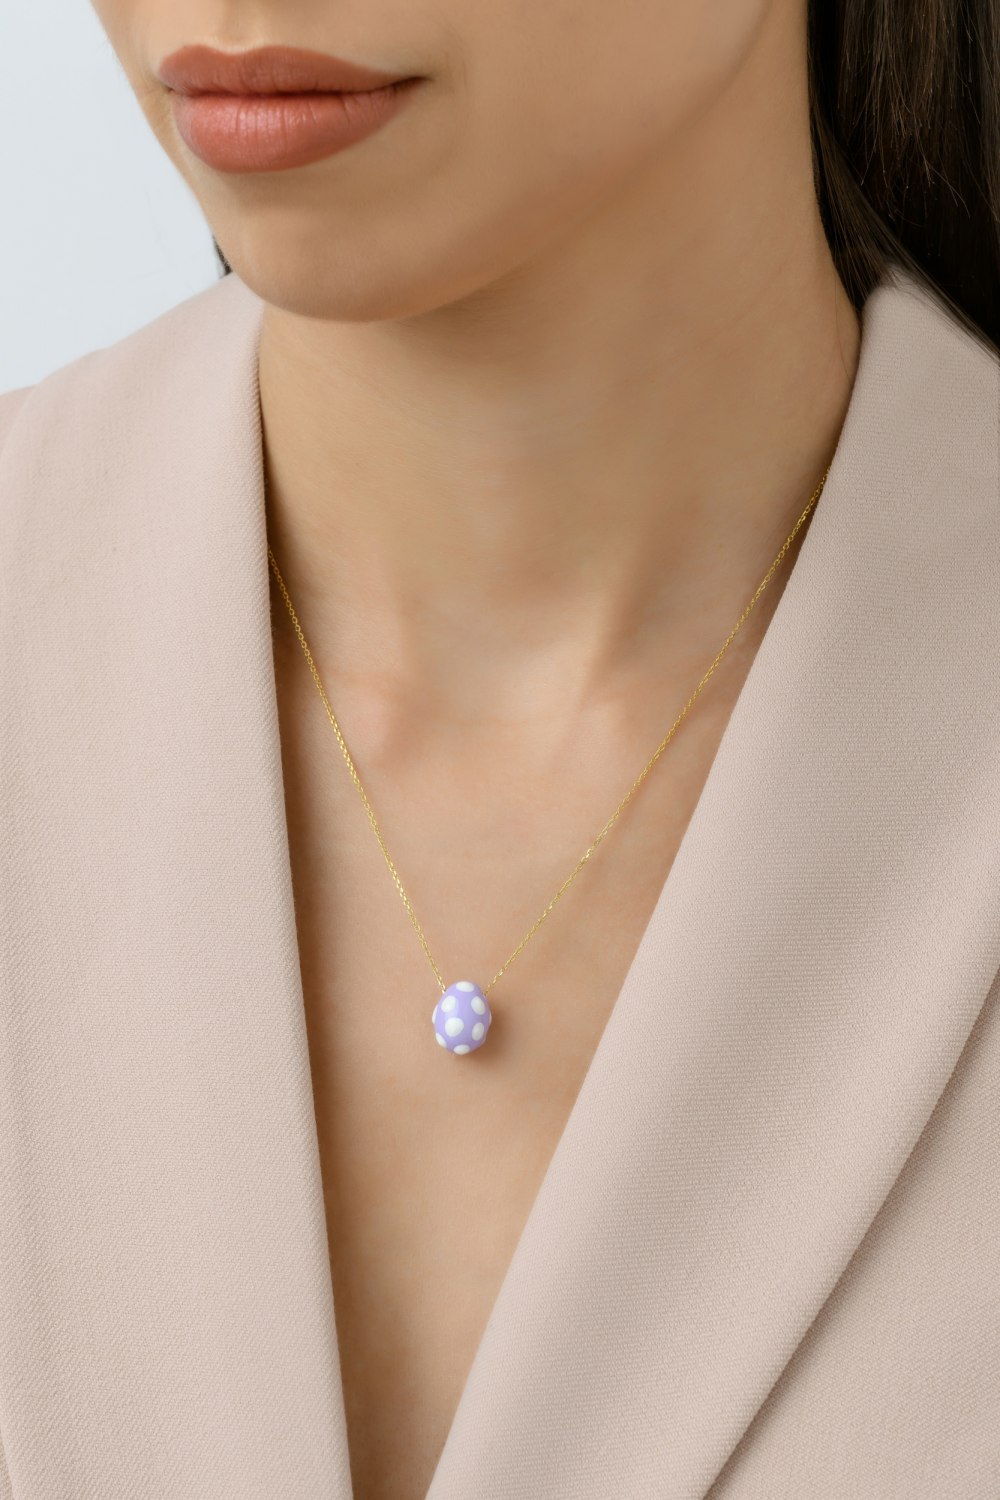 KESSARIS - Purple Polka-Dot Easter Egg Pendant Necklace